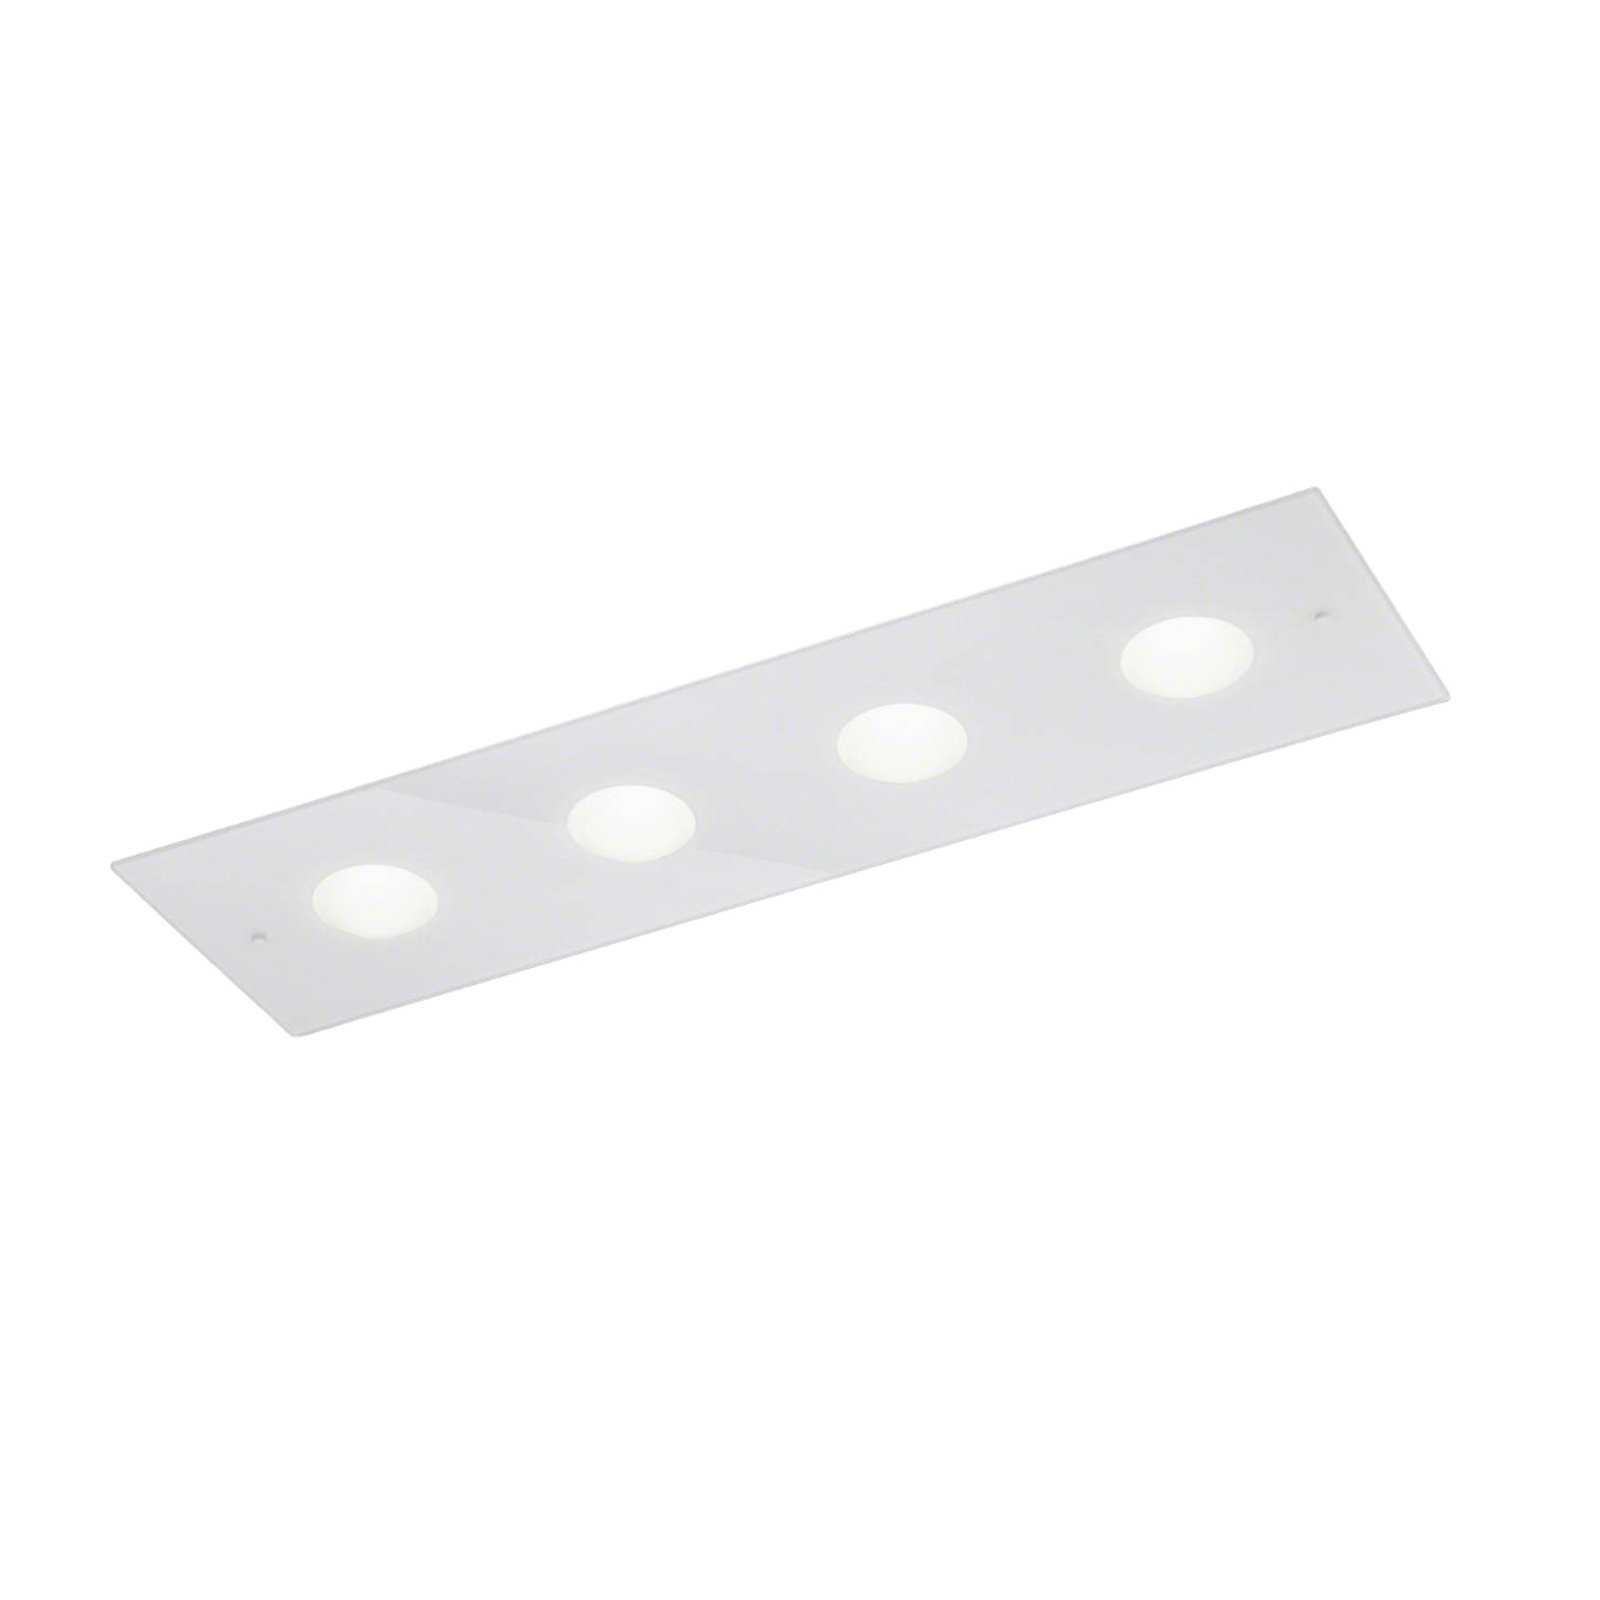 Helestra Nomi plafonnier LED 75x21 cm dim blanc